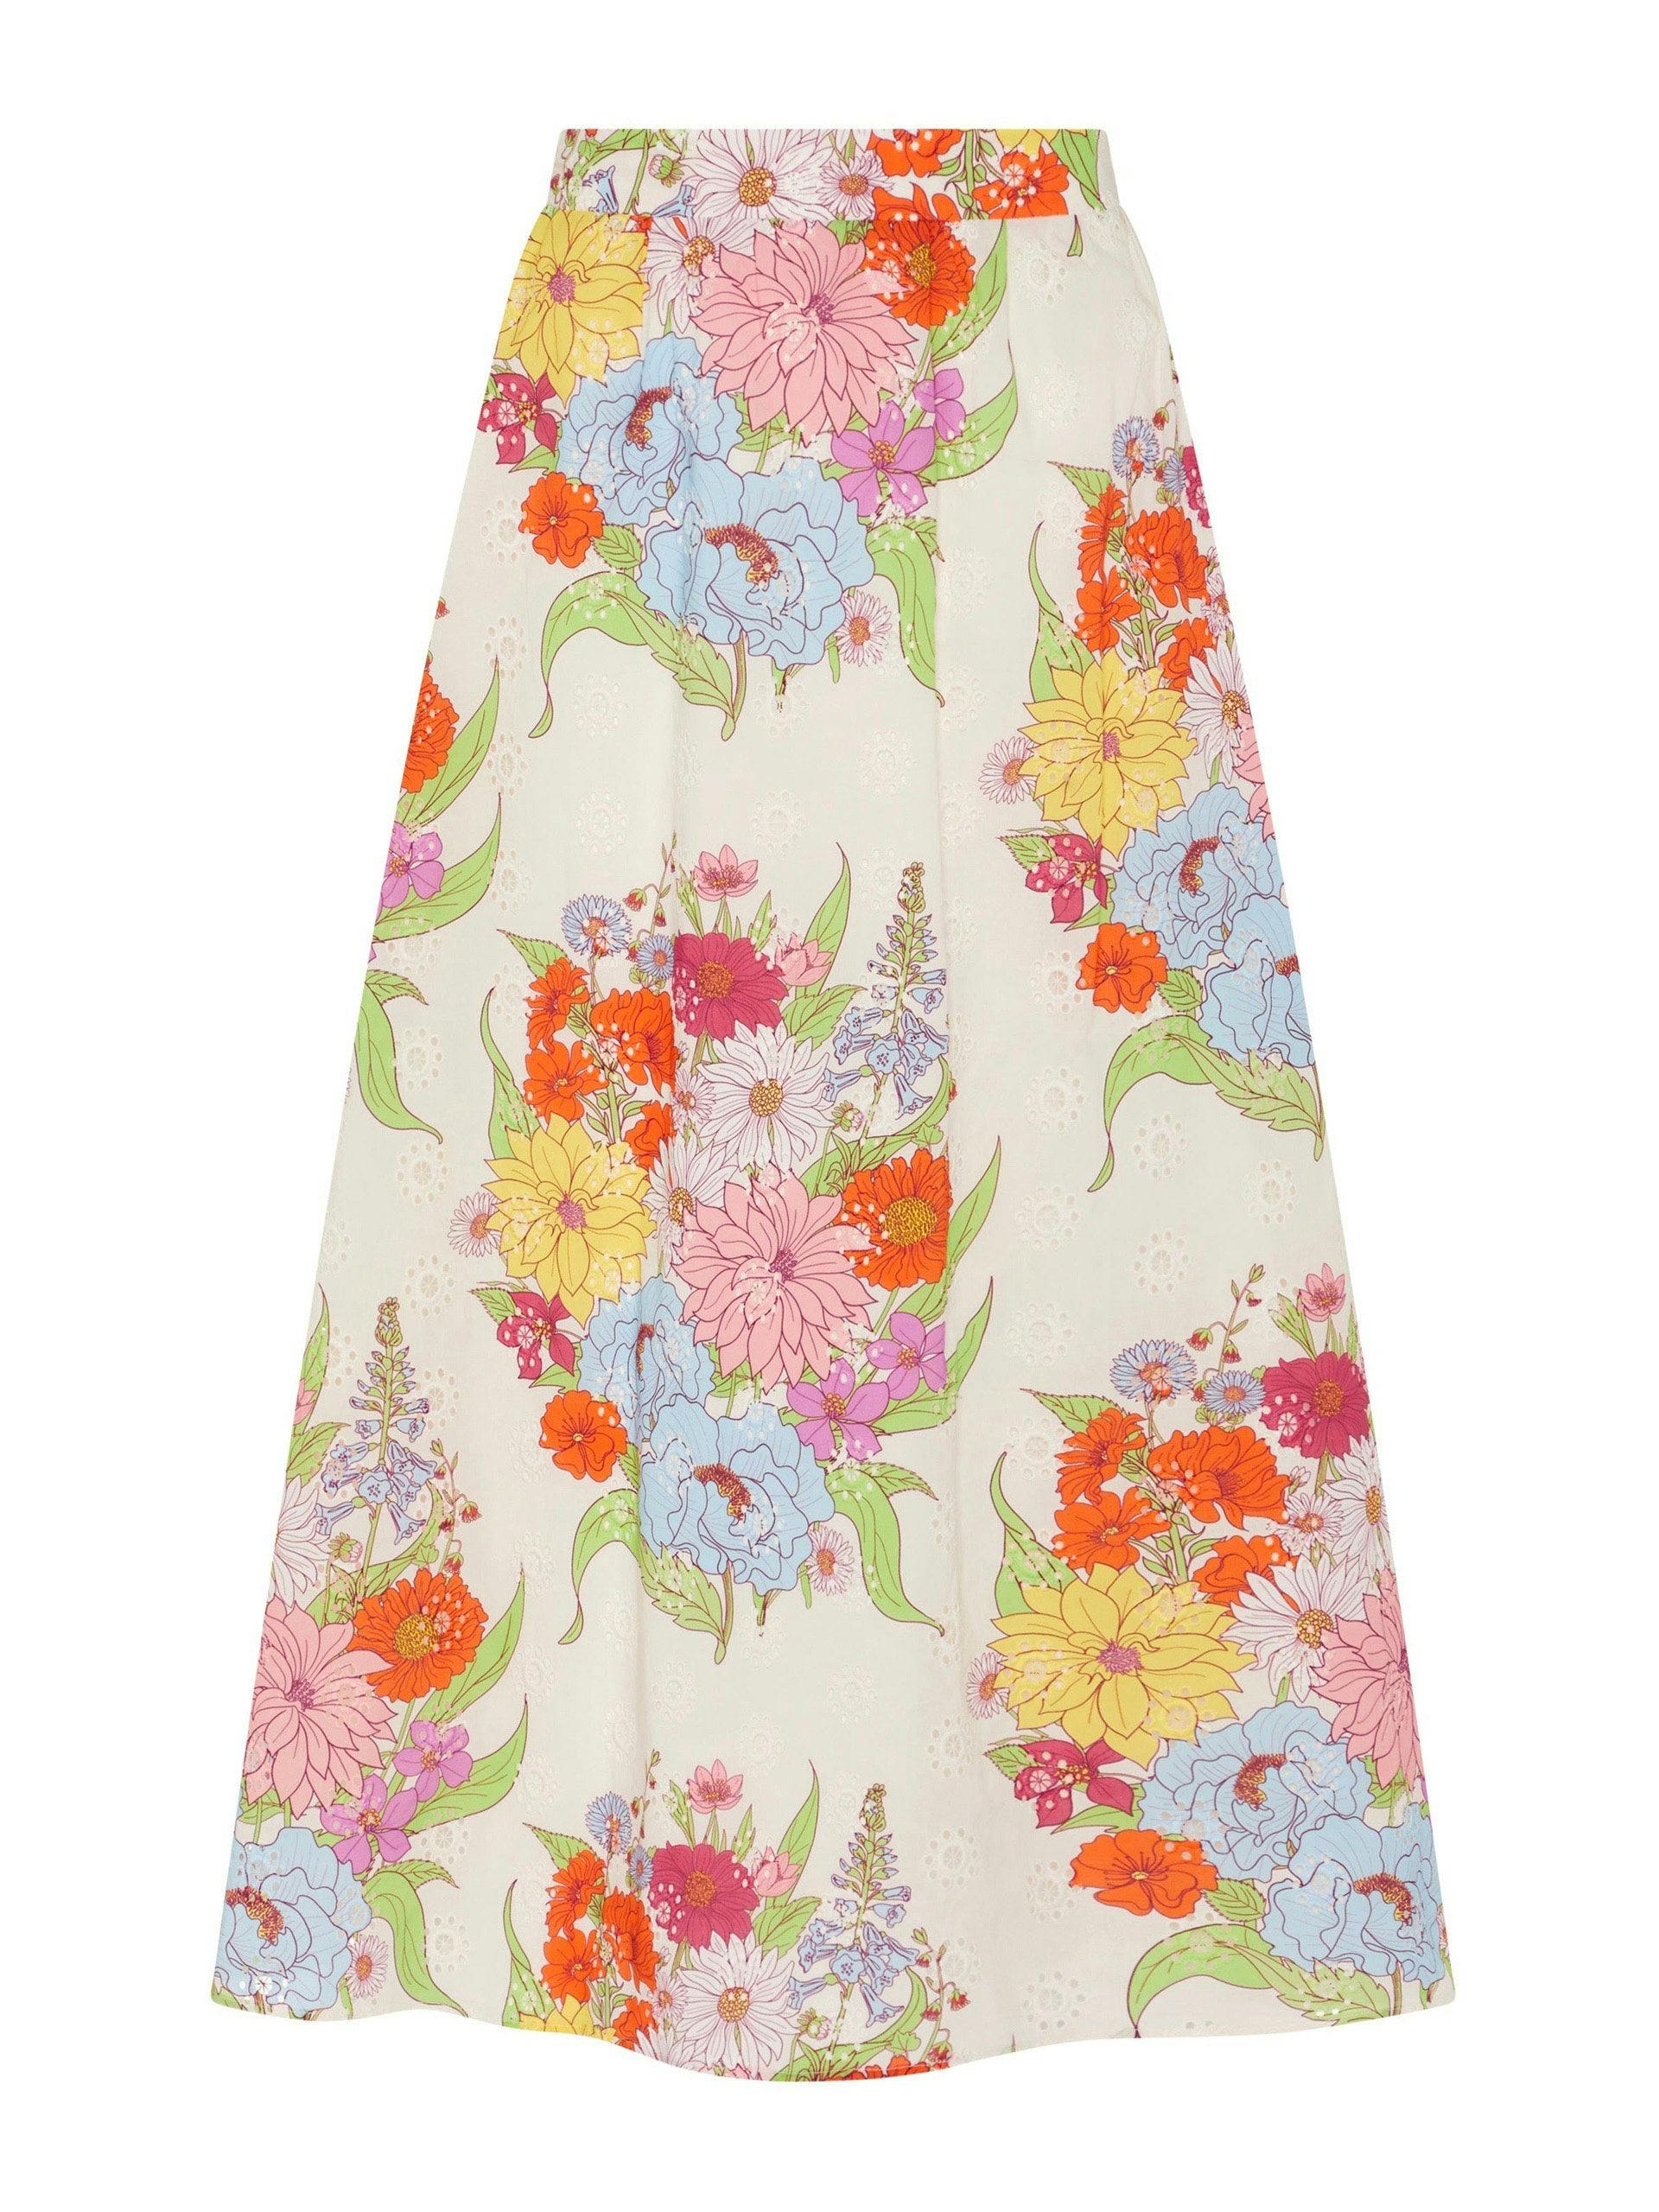 Rhea broderie anglaise midi skirt in Calliope floral print